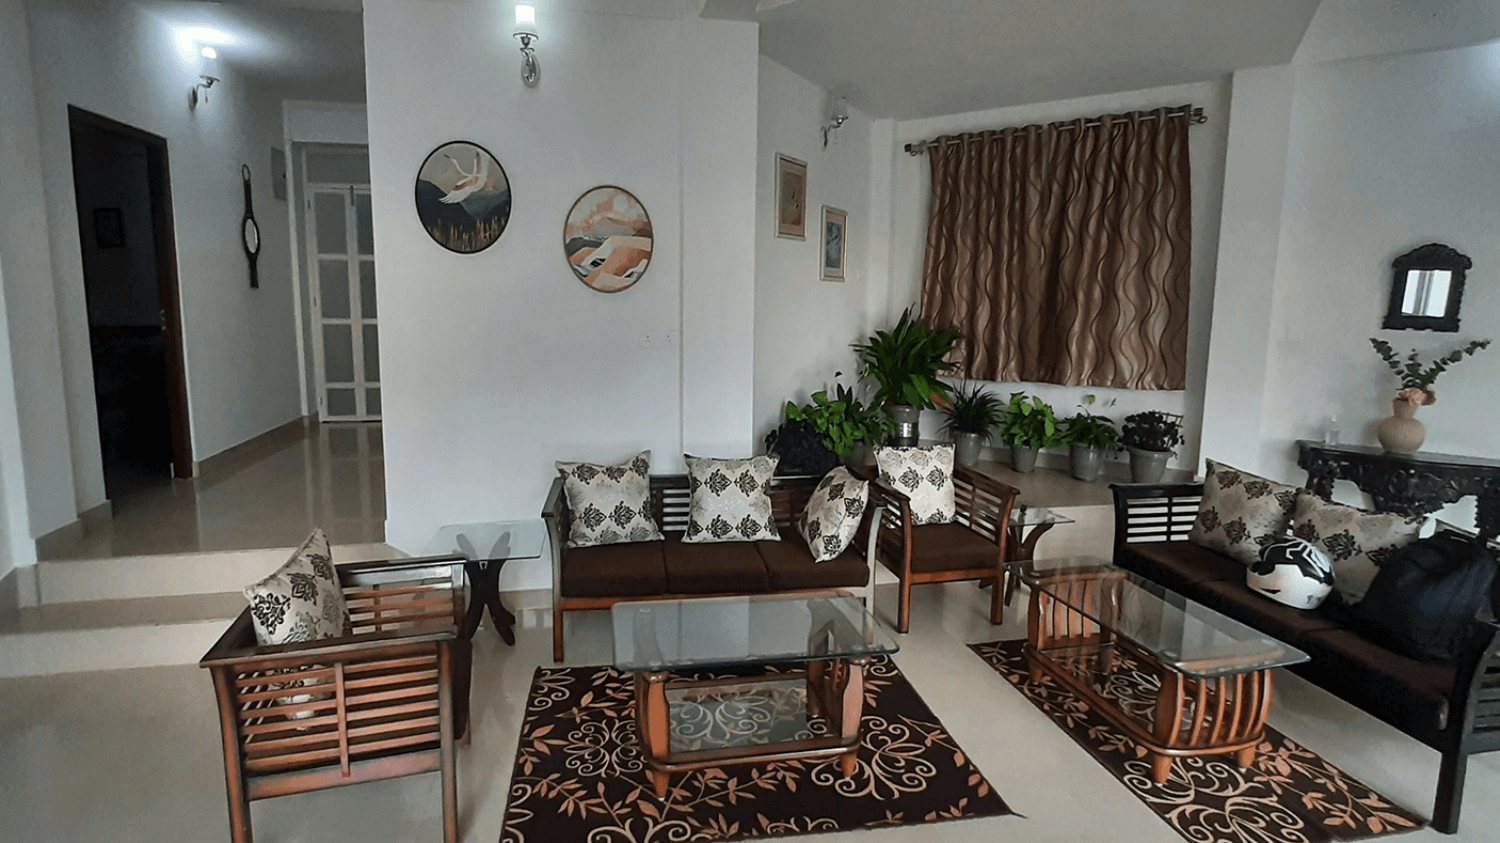 Lashisha Guest House, Shillong, Meghalaya, India